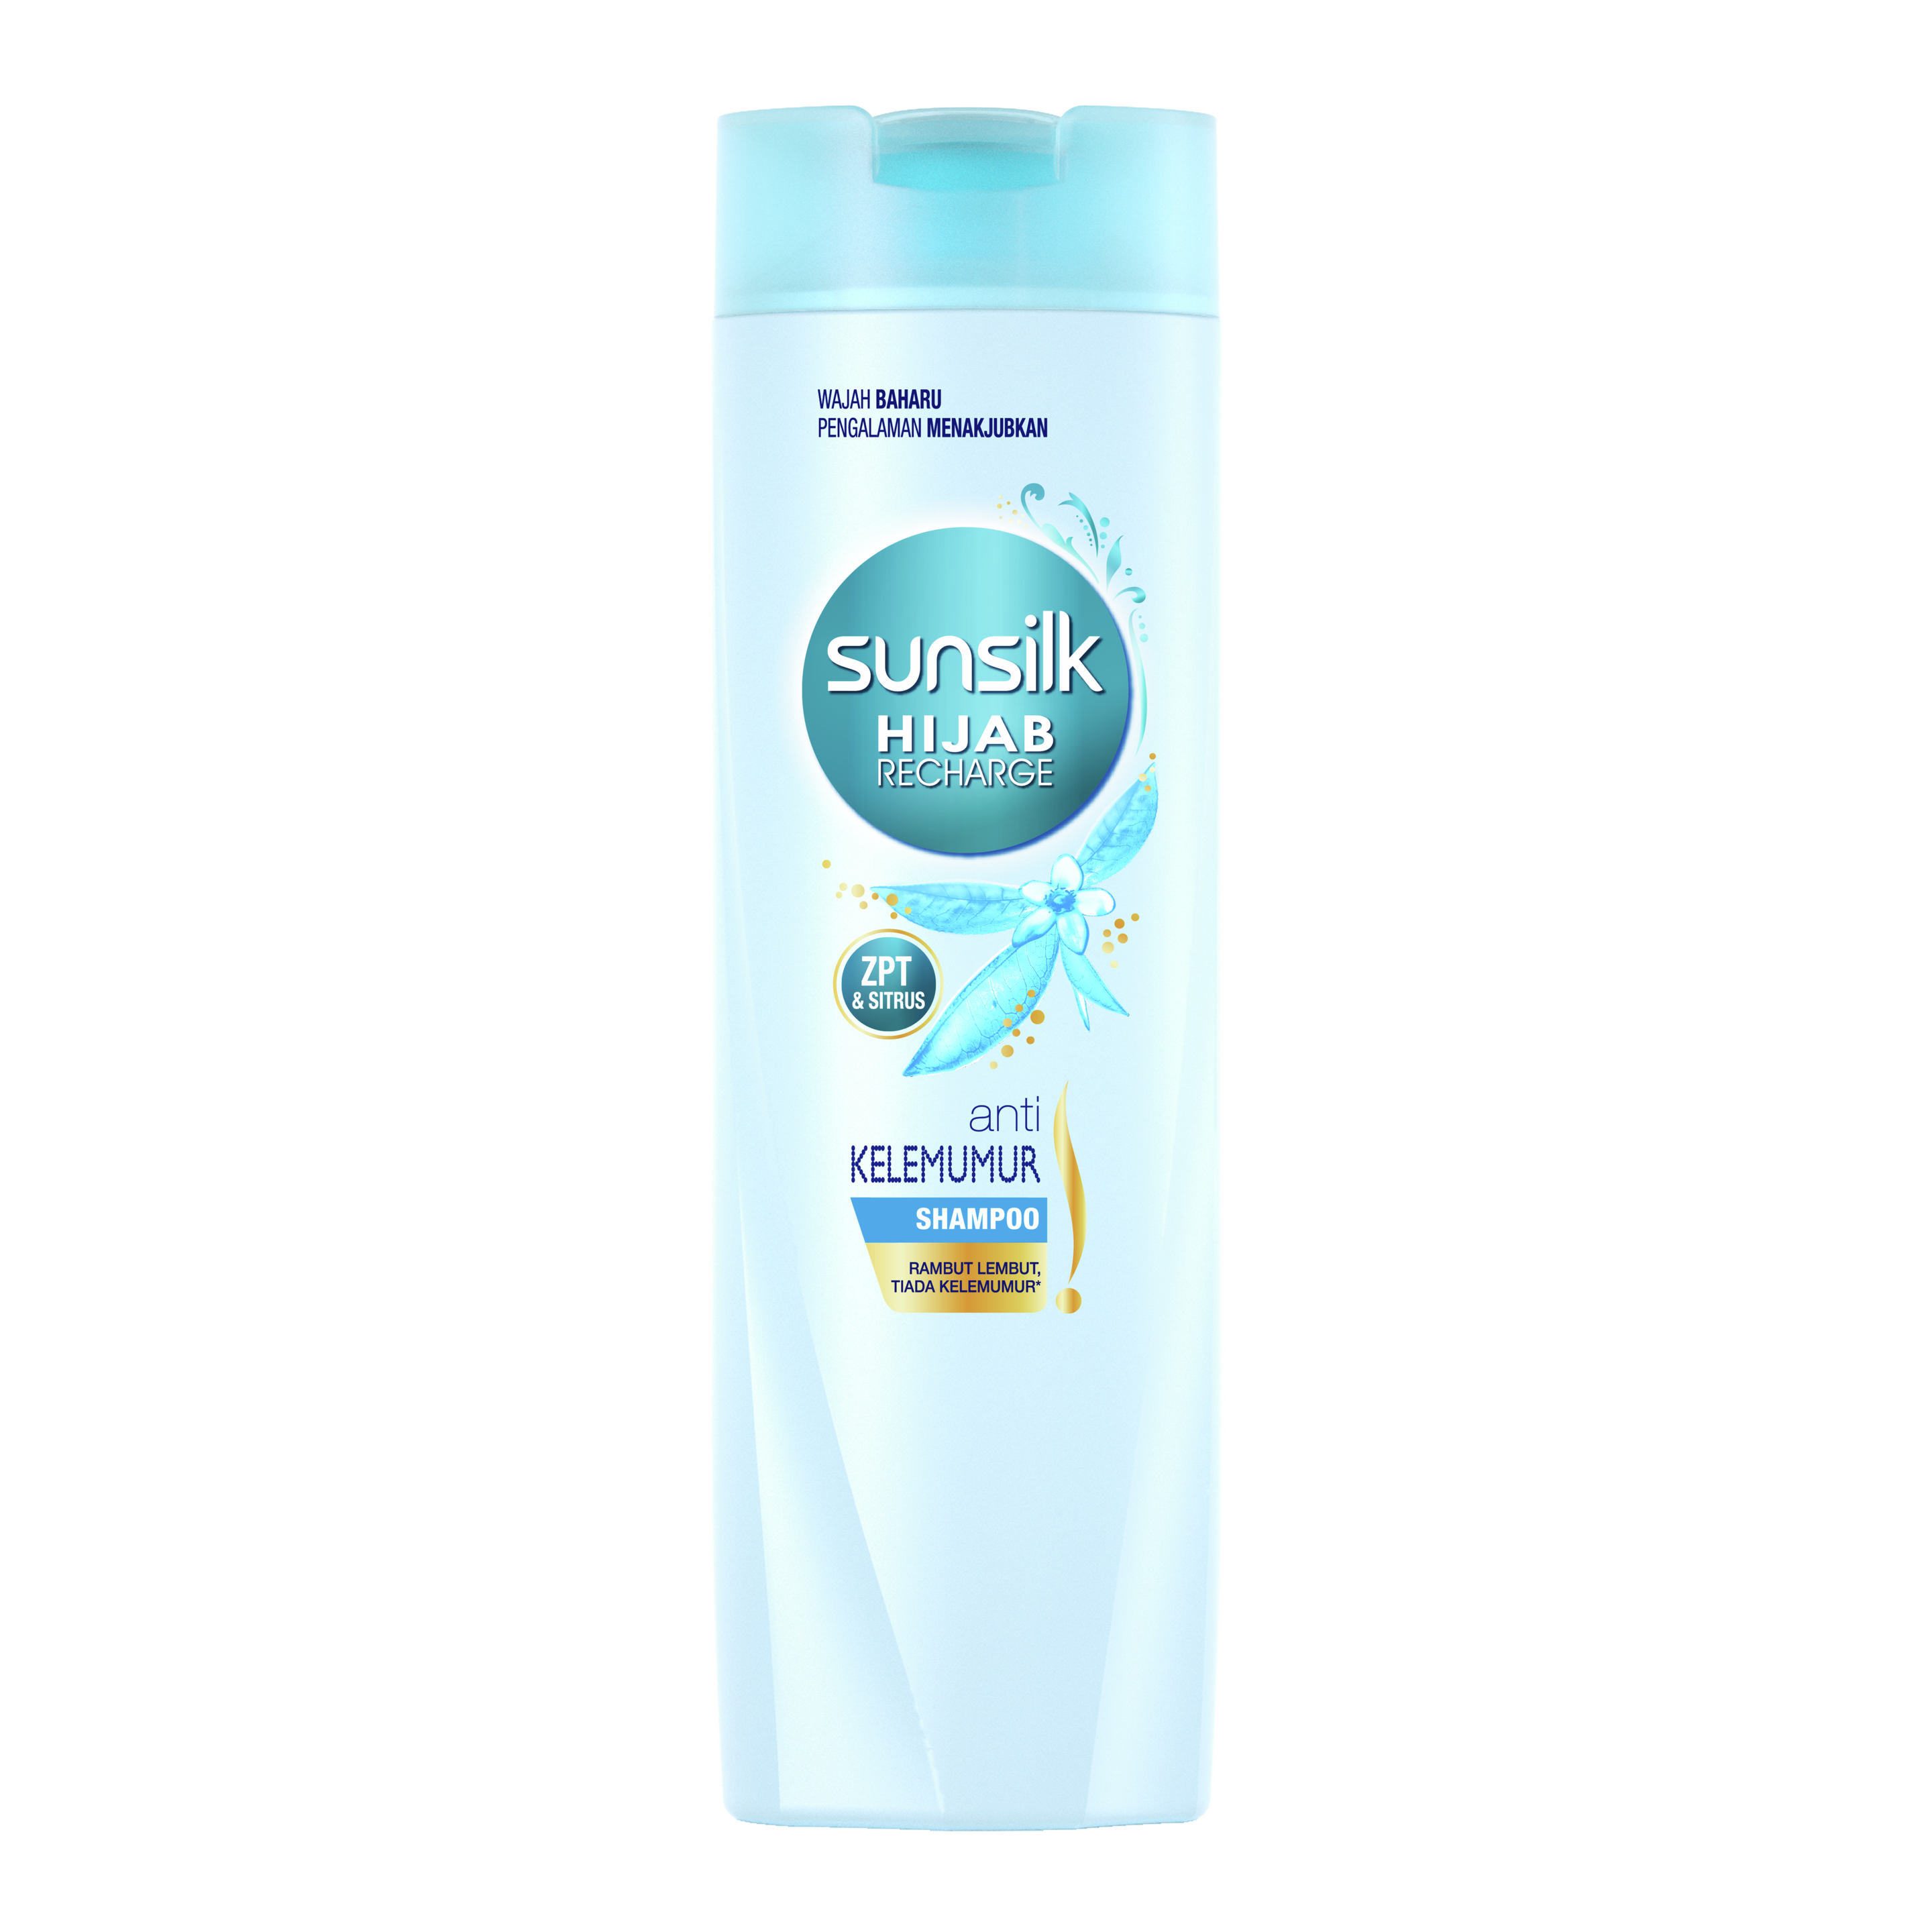 Sunsilk Hijab Recharge Anti Kelemumur Shampoo 160ml front of pack image